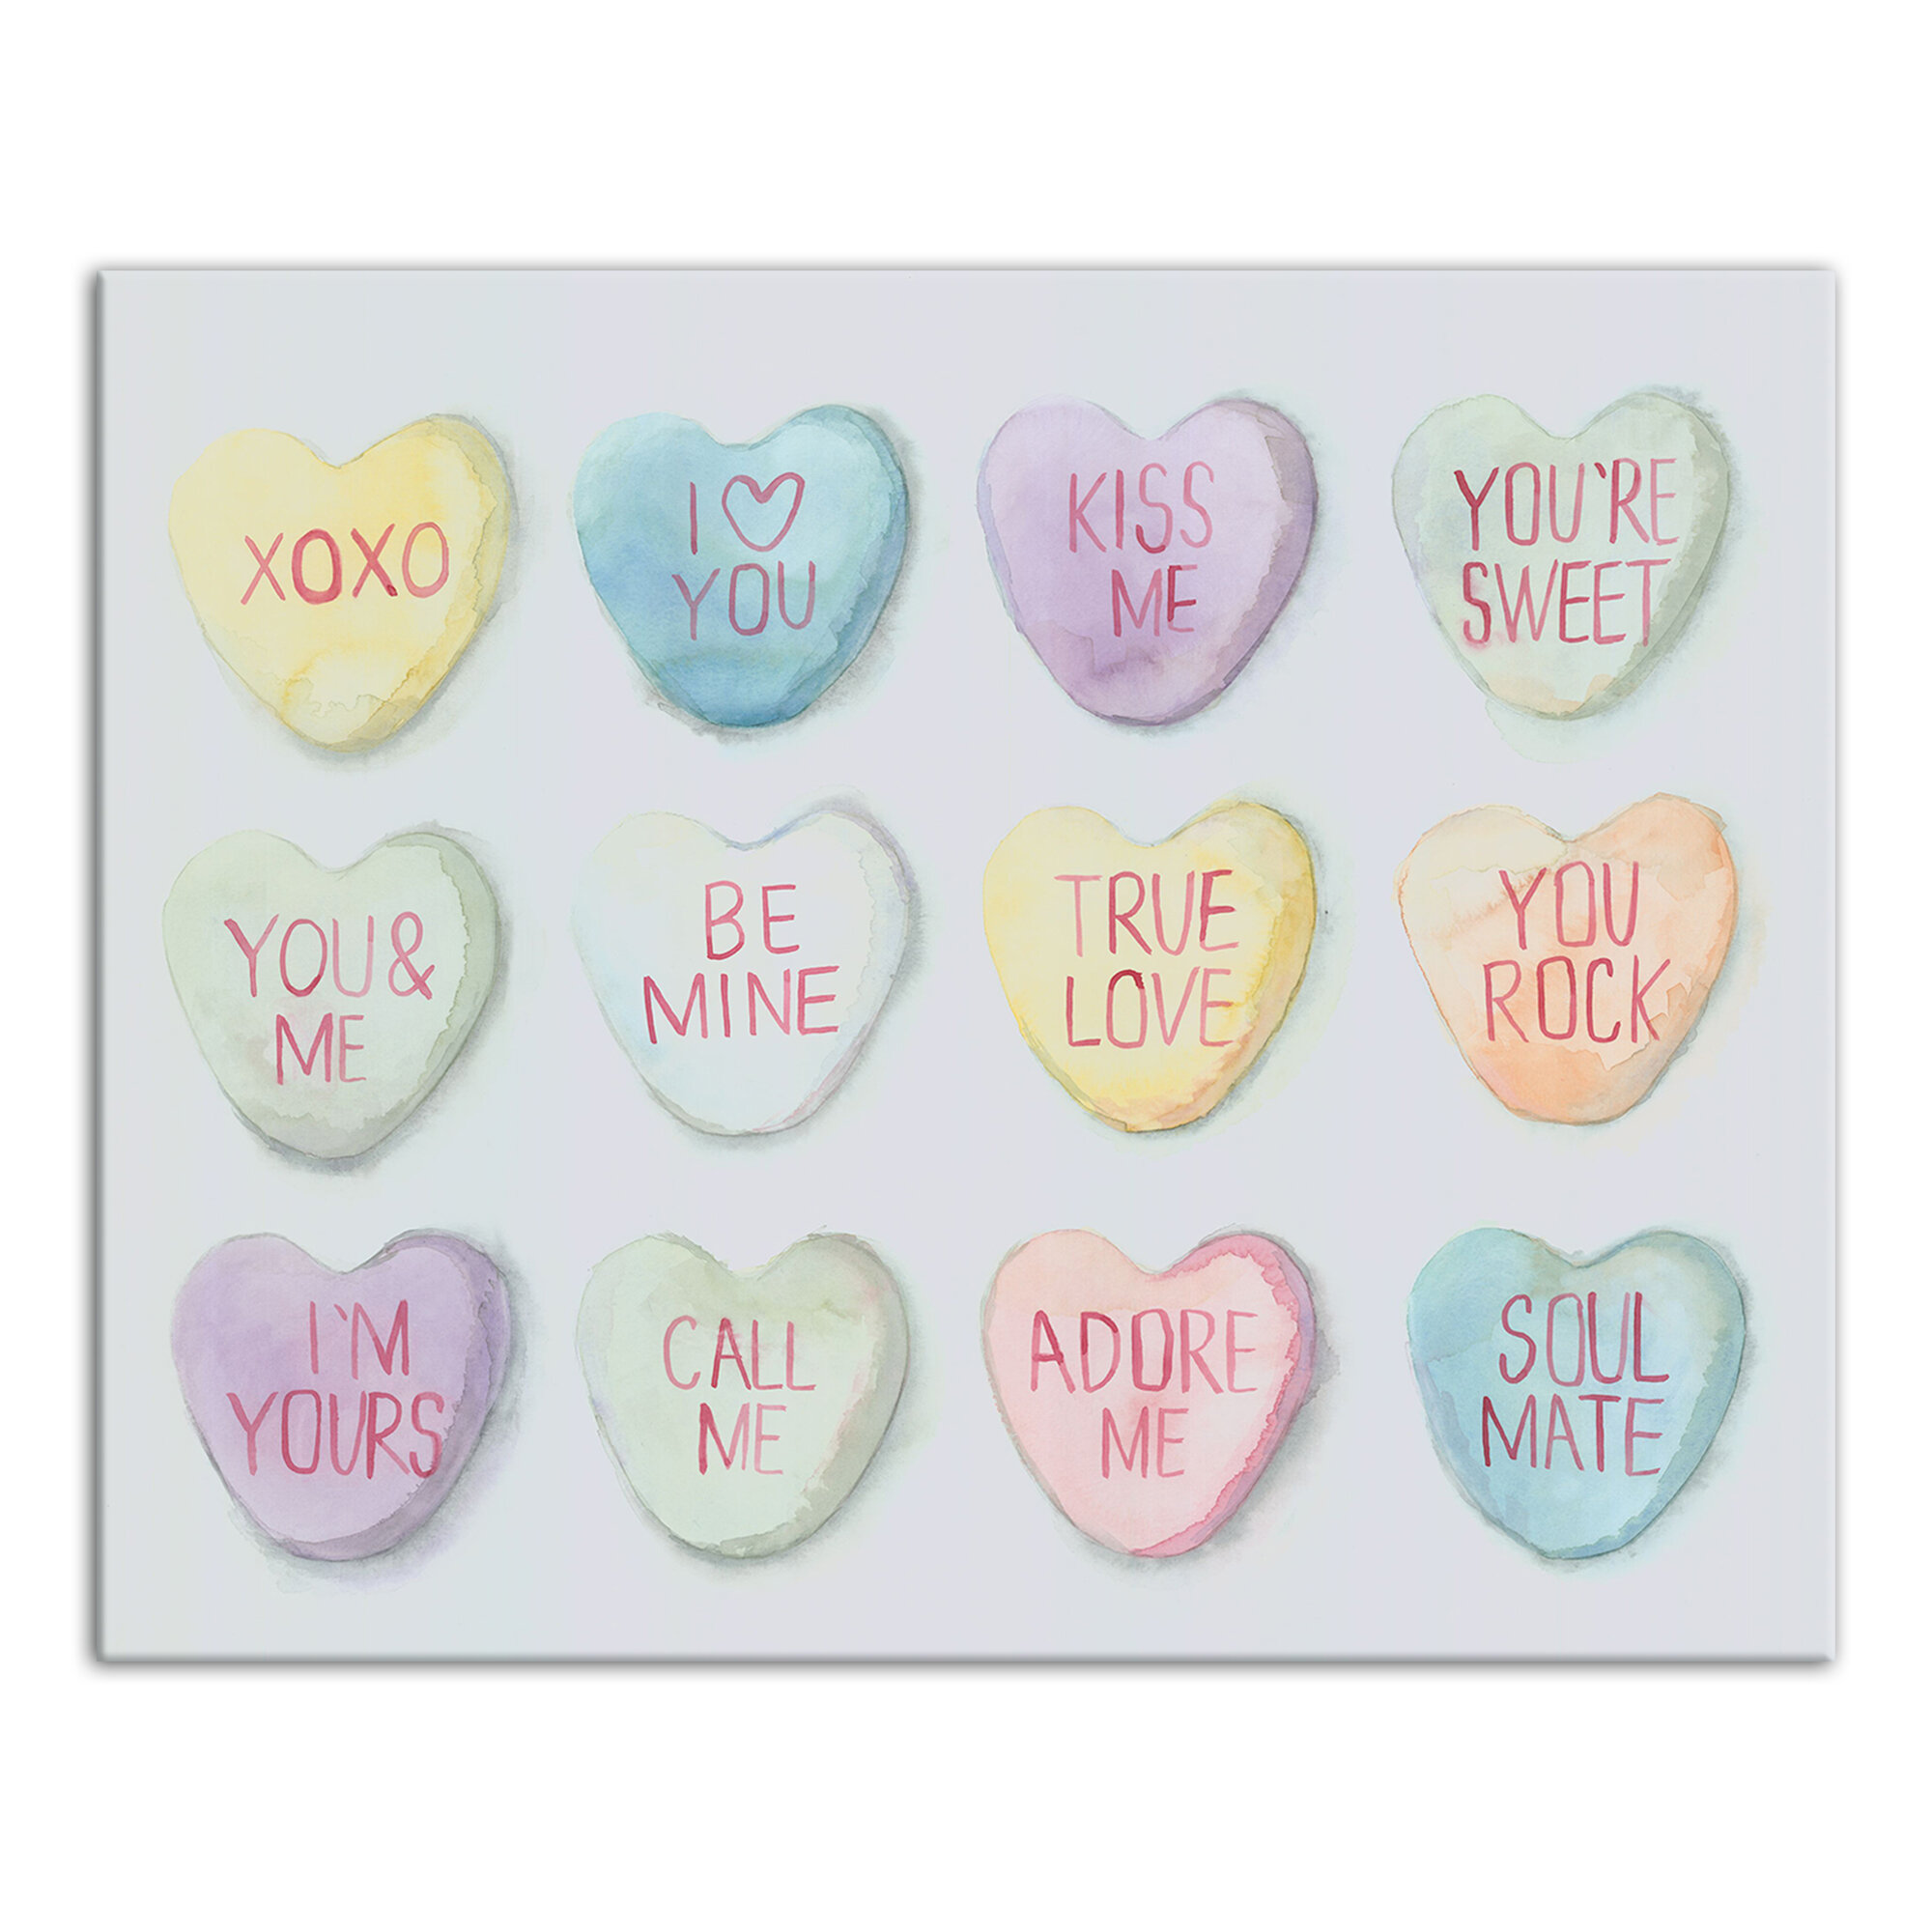 cute candy heart sayings